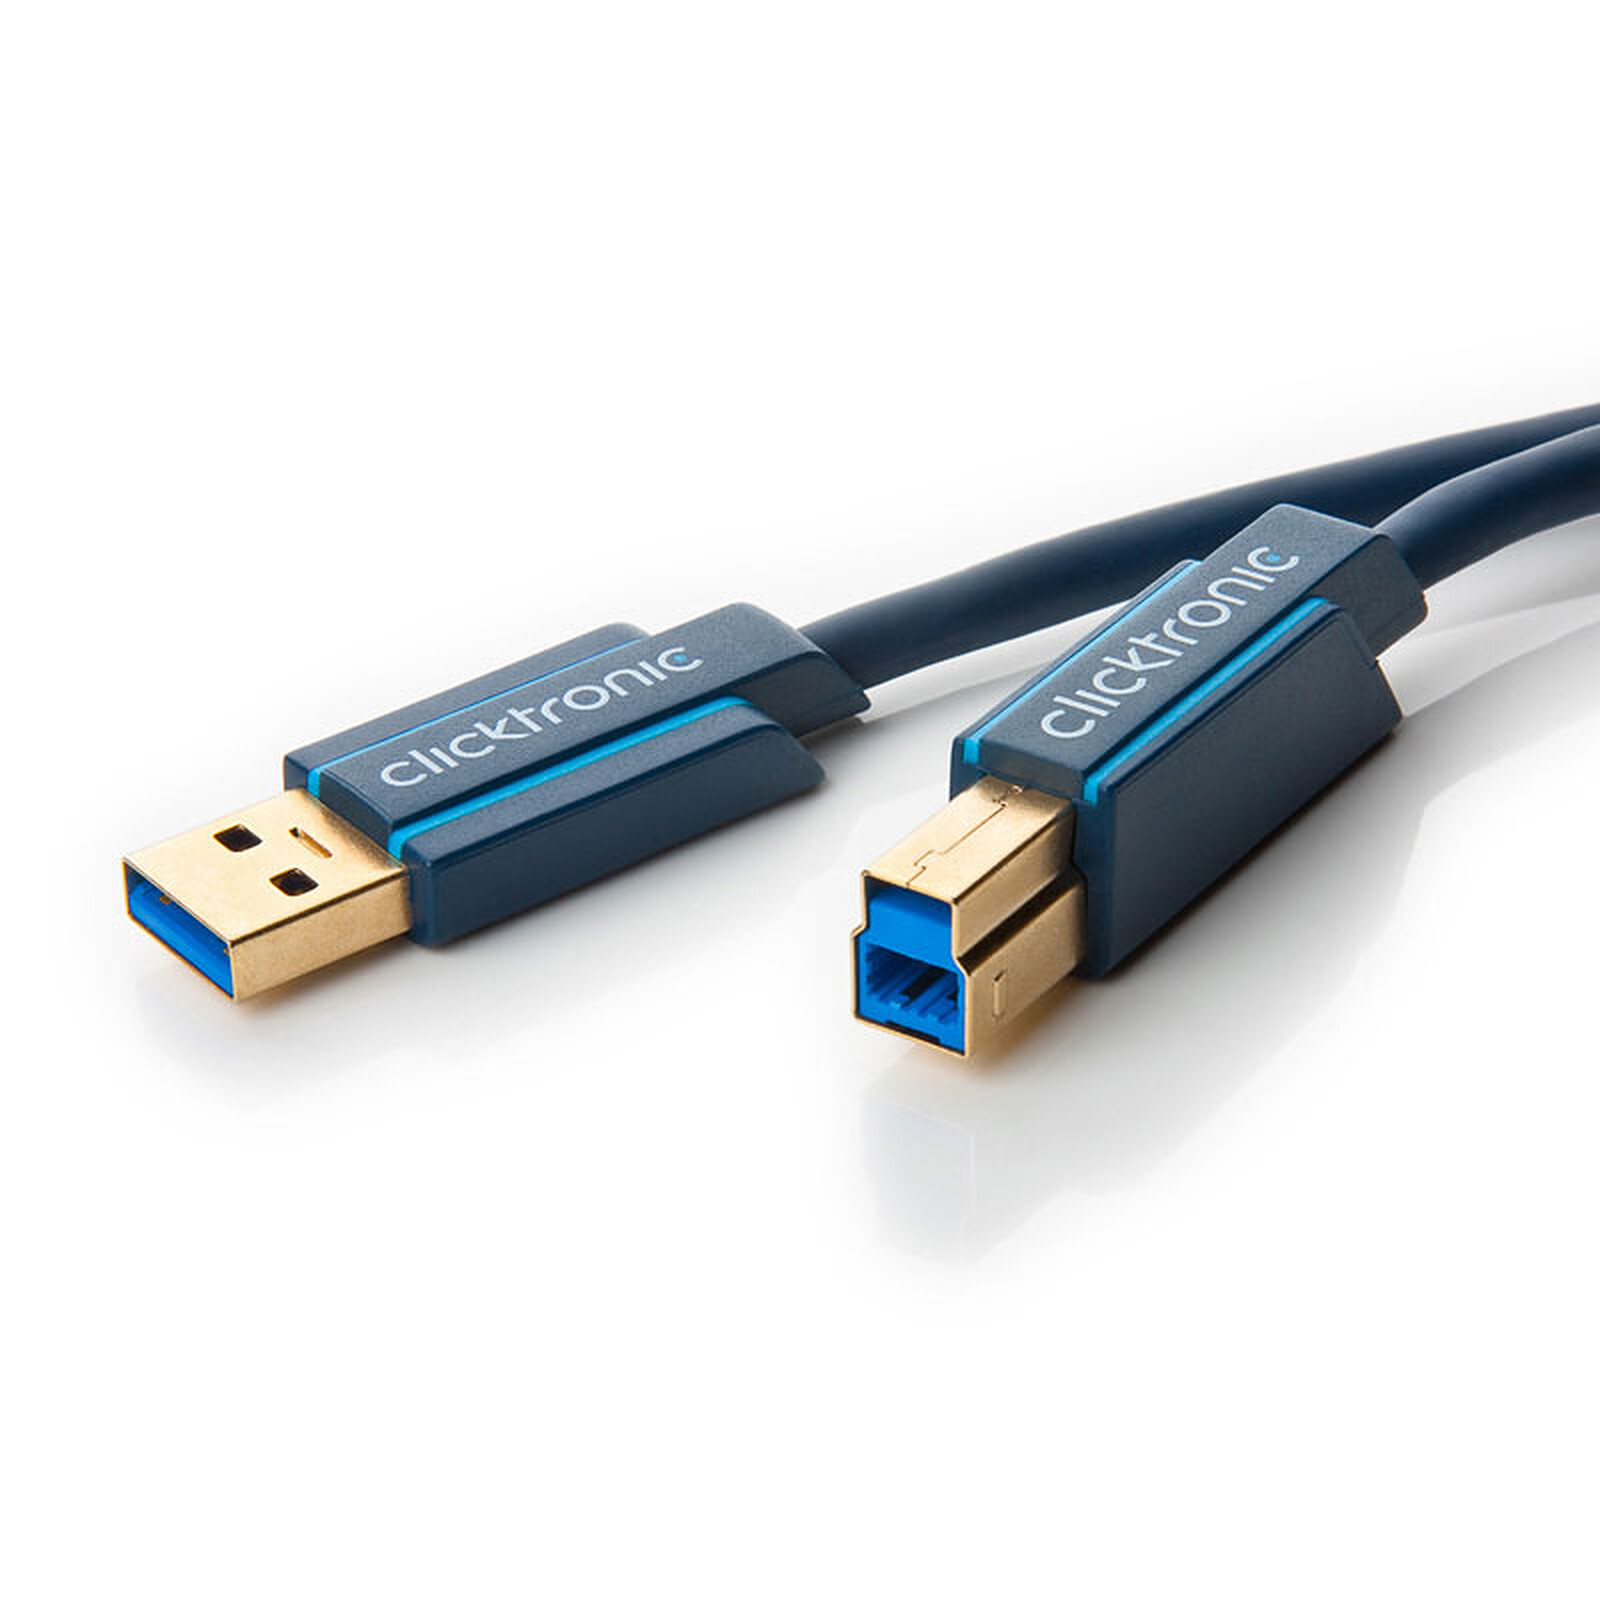 1.5M Câble USB 3.0 Mâle vers usb Mâle / Femelle CABLE CORDON RALLONGE USB  3.0